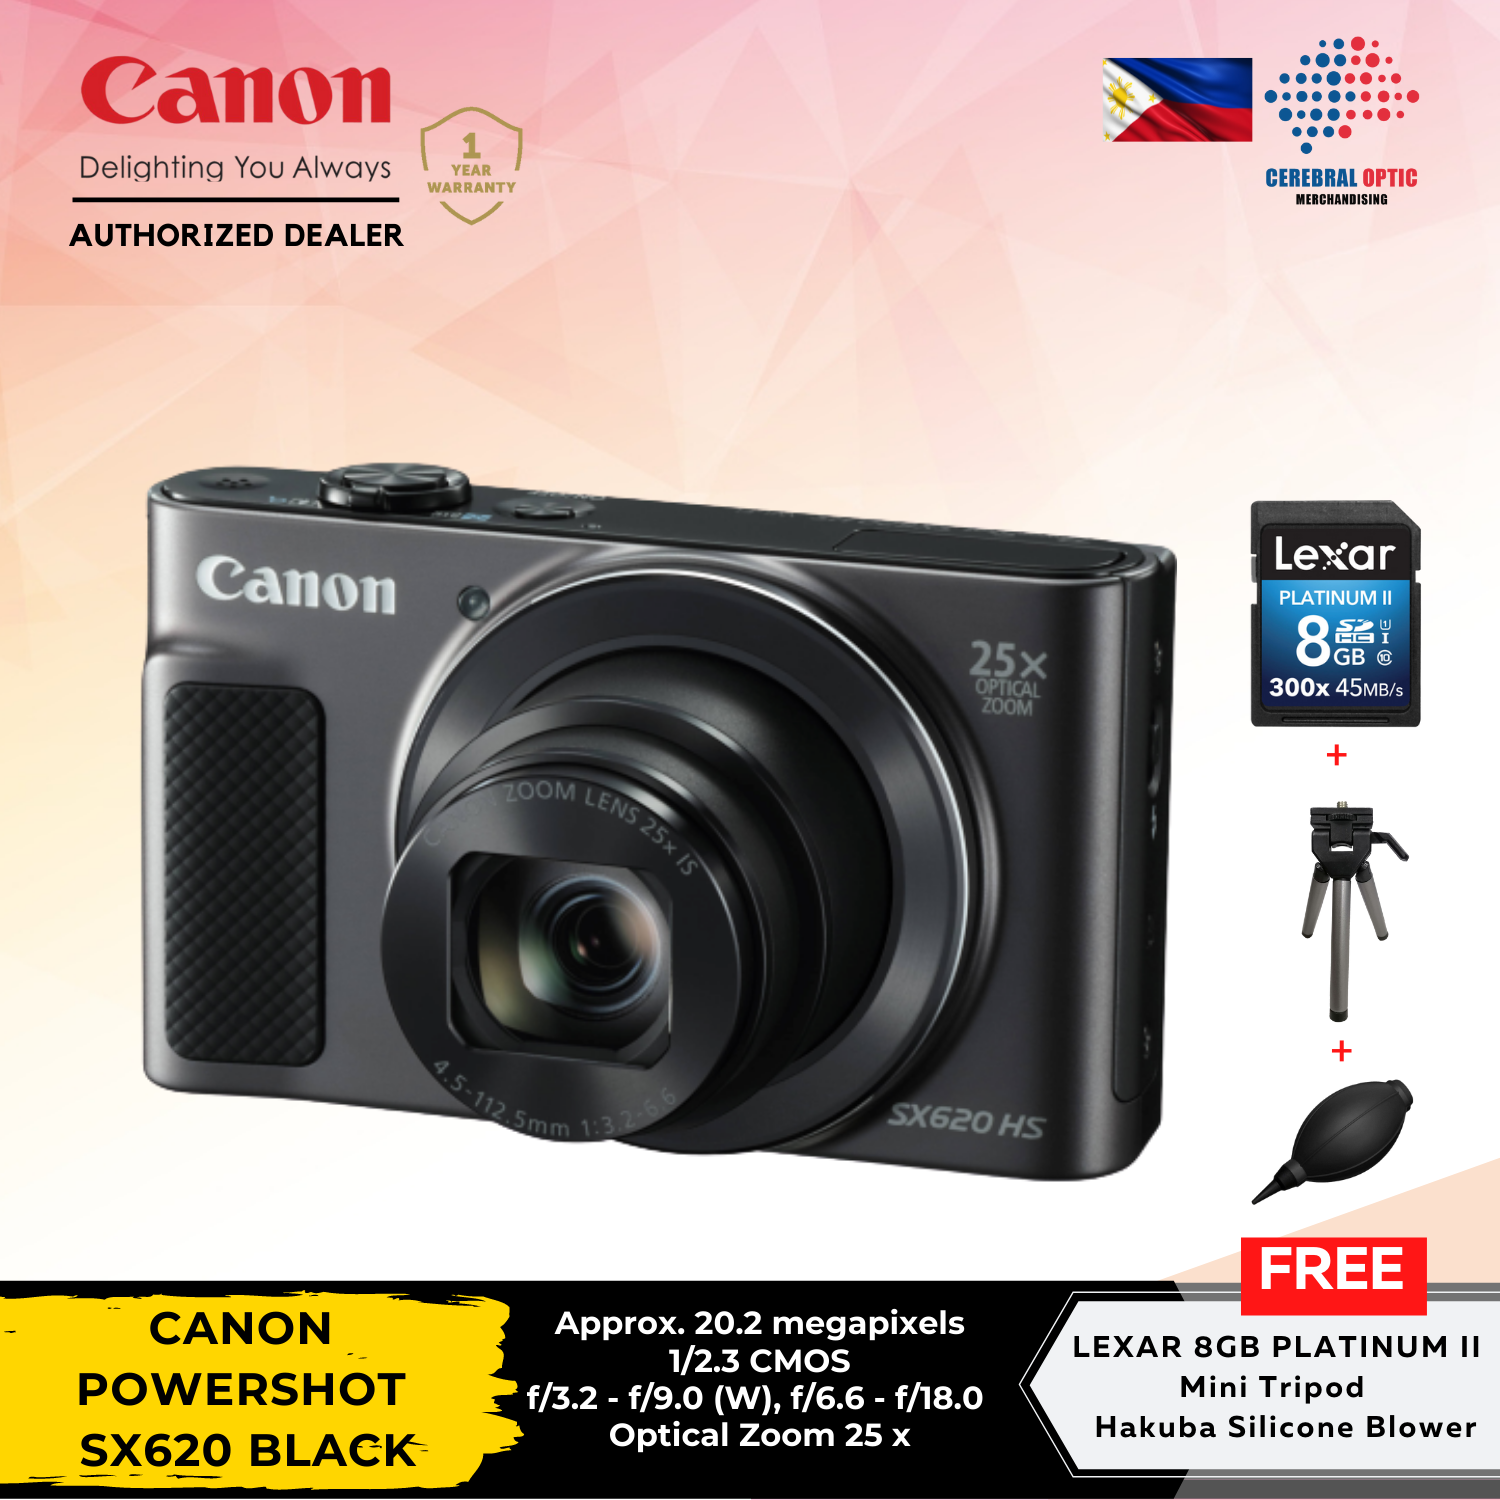 Catena Echt niet variabel Canon Powershot SX620 (BLACK) + LEXAR 8GB Platinum II 300X 45MB/S + Mini  Tripod & Hakuba Silicone Blower | Lazada PH